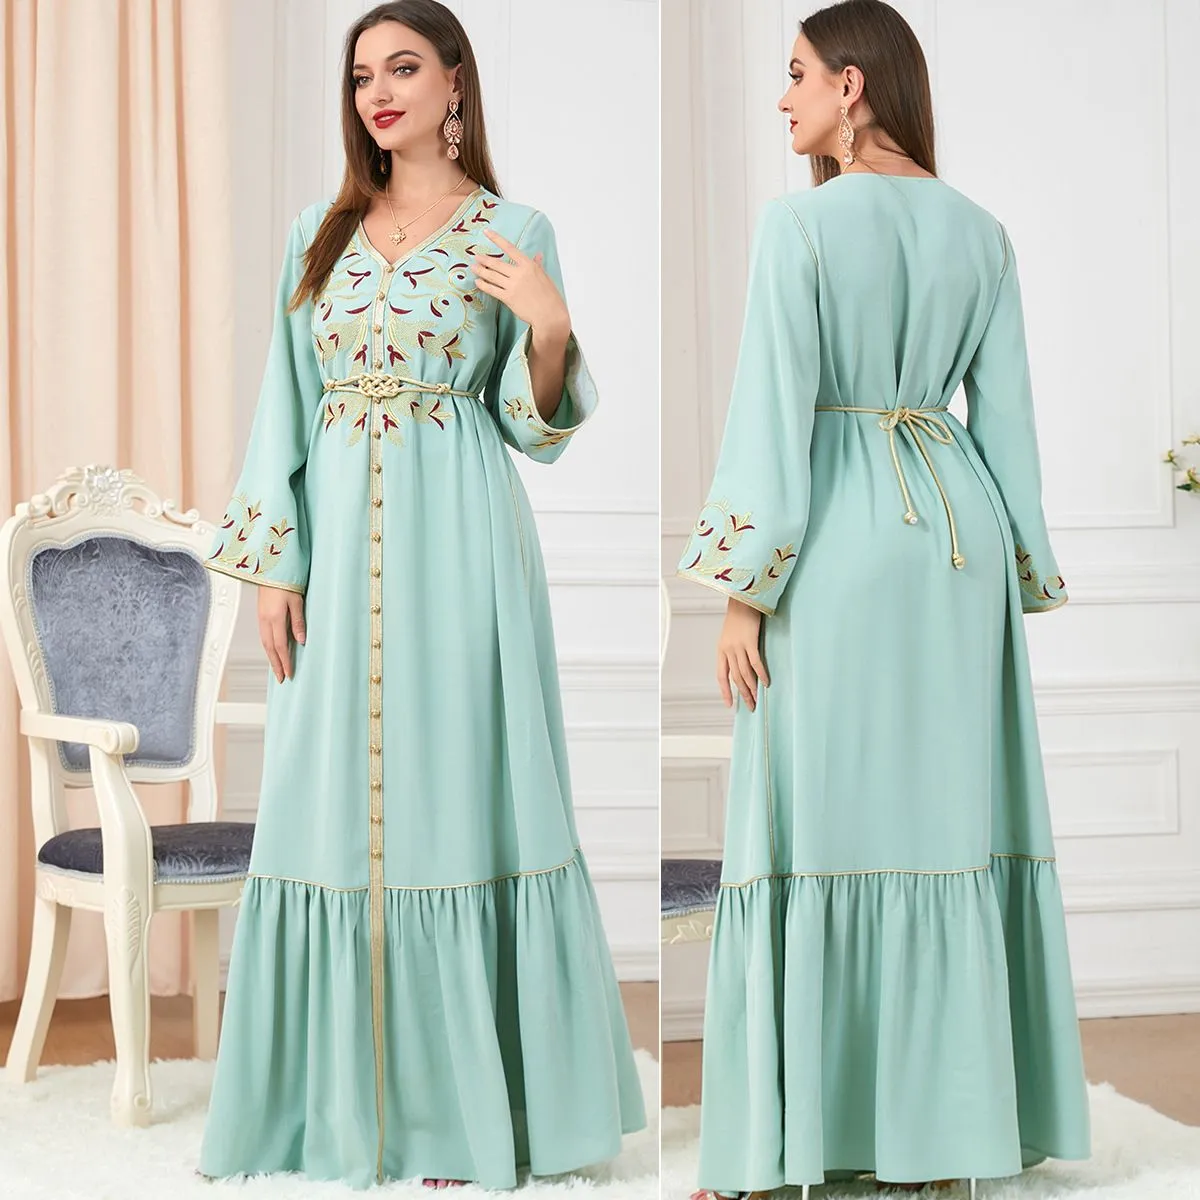 Ethnic Clothing Jellaba Hijab Lady Dress Muslim Long Retro Loose Vintage Luxury With Zipper Turkey Maxi Party Islam Robe In Ramadan